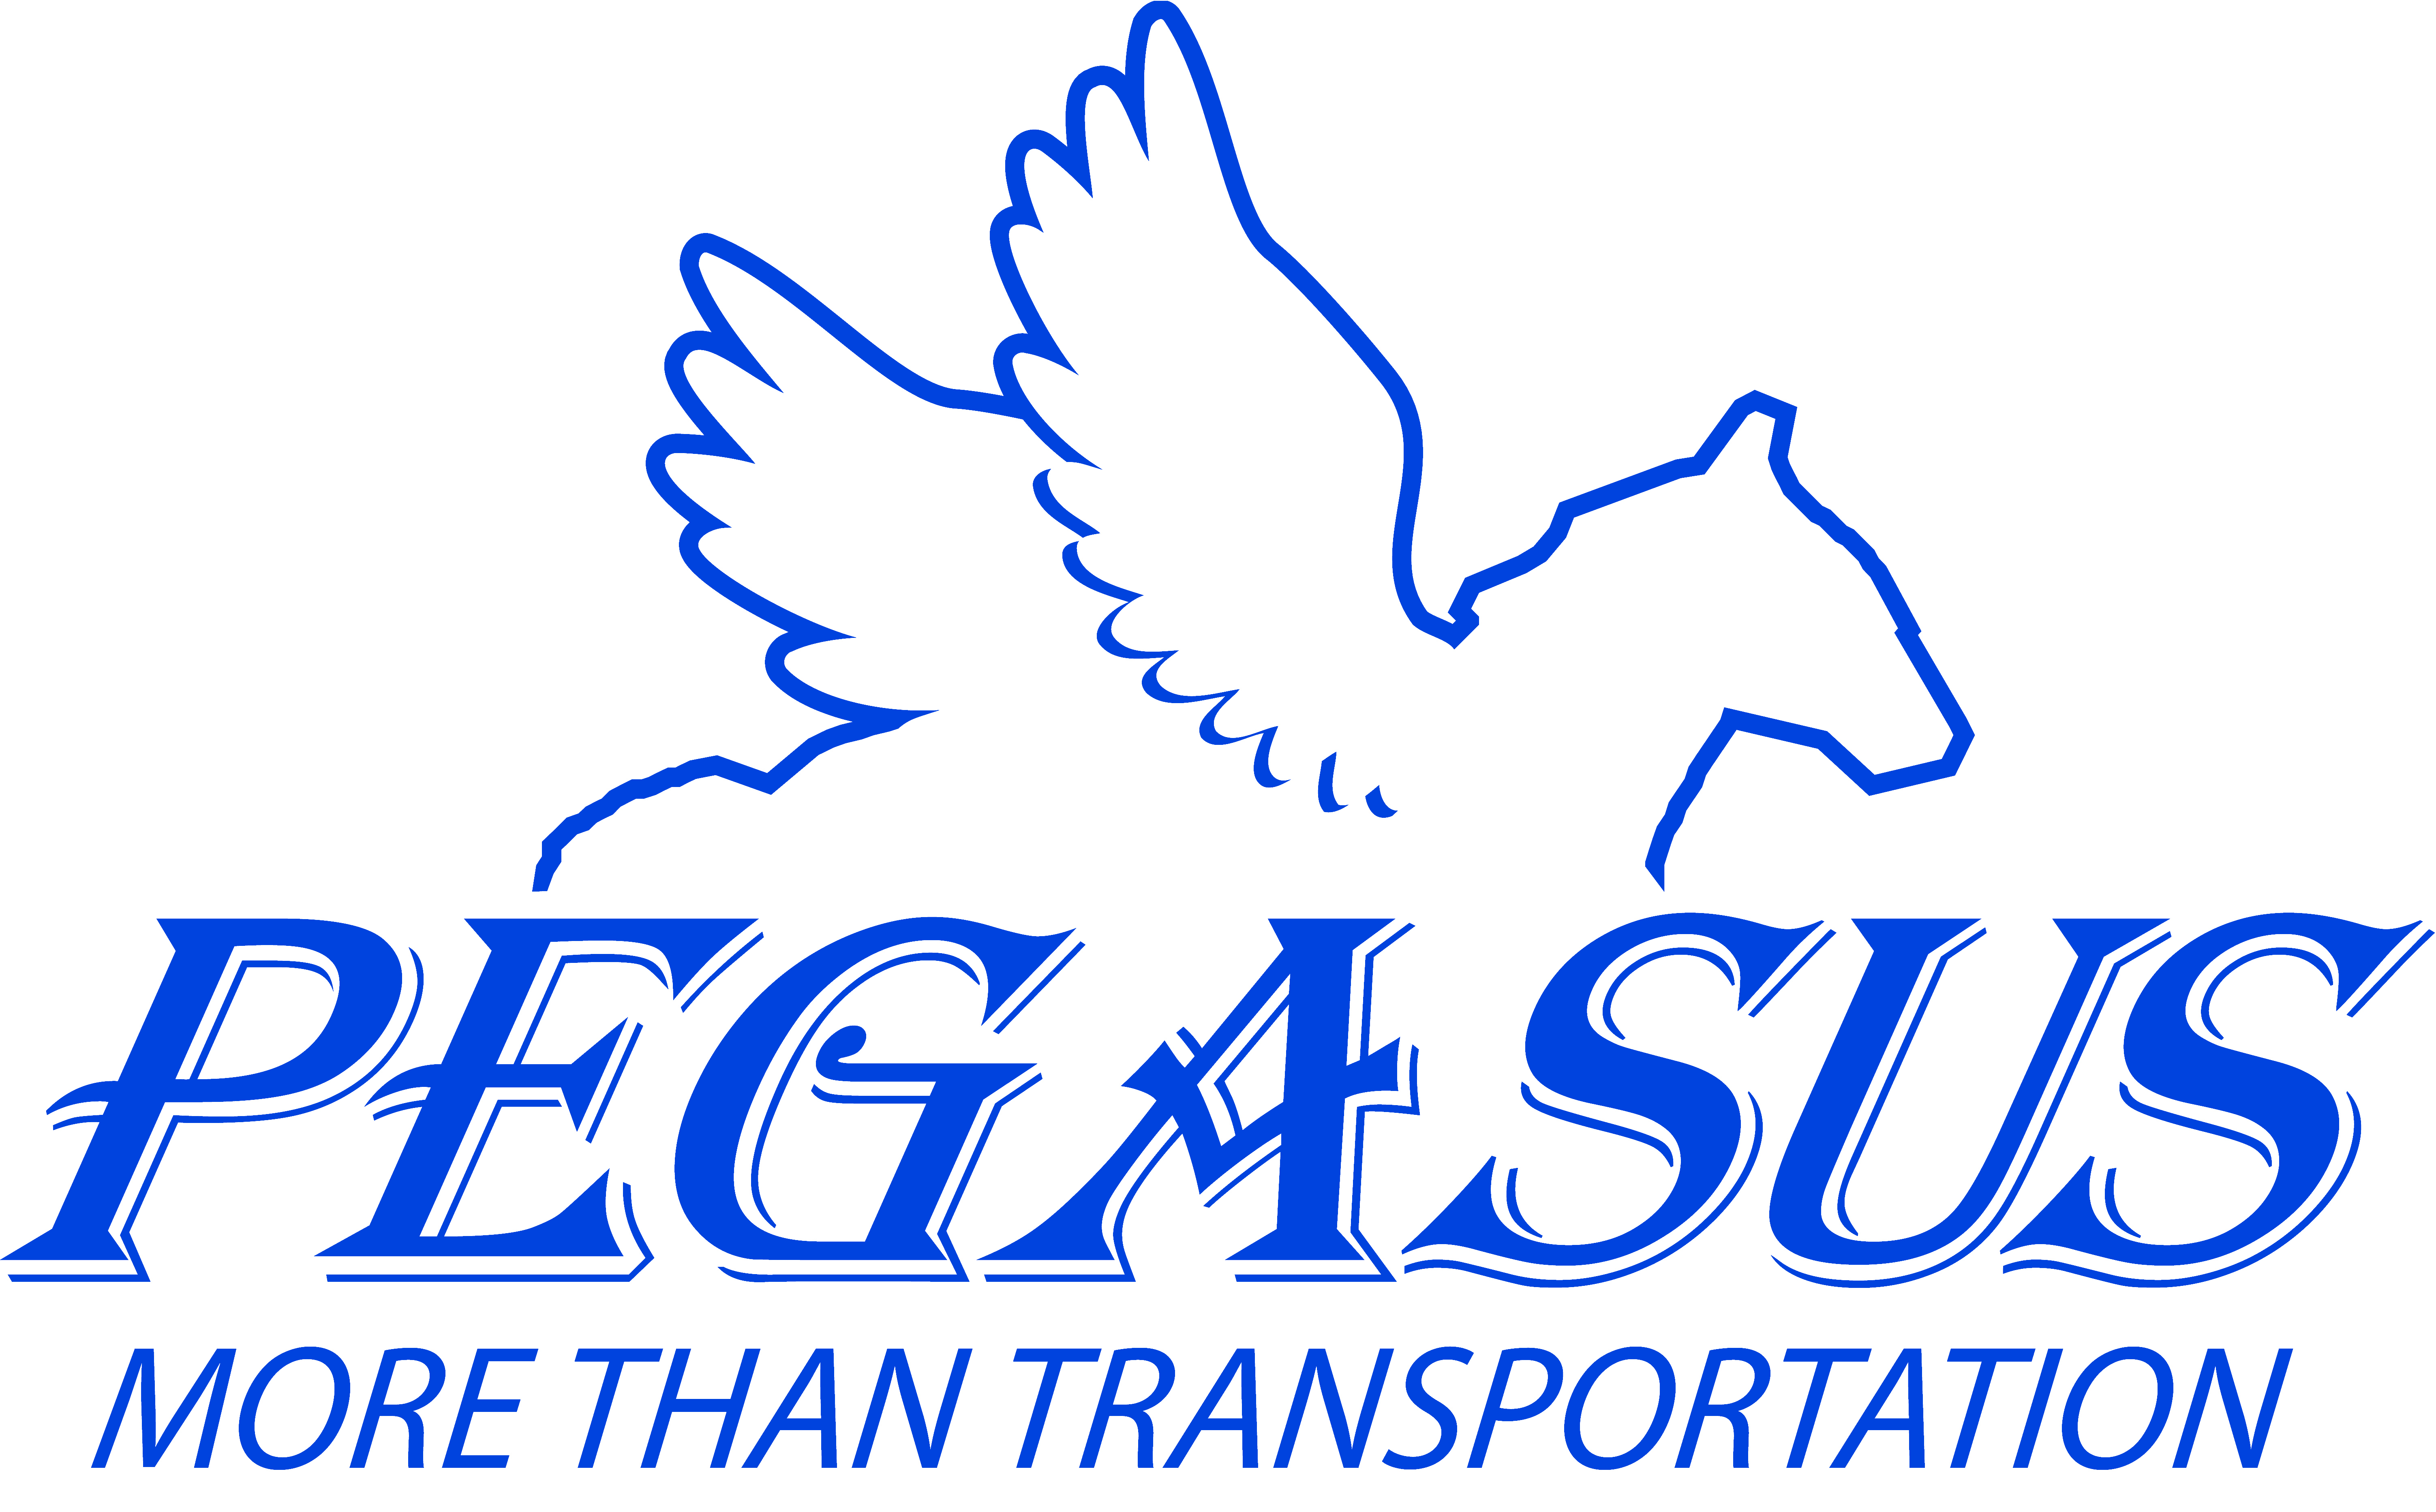 pegasus travel srl